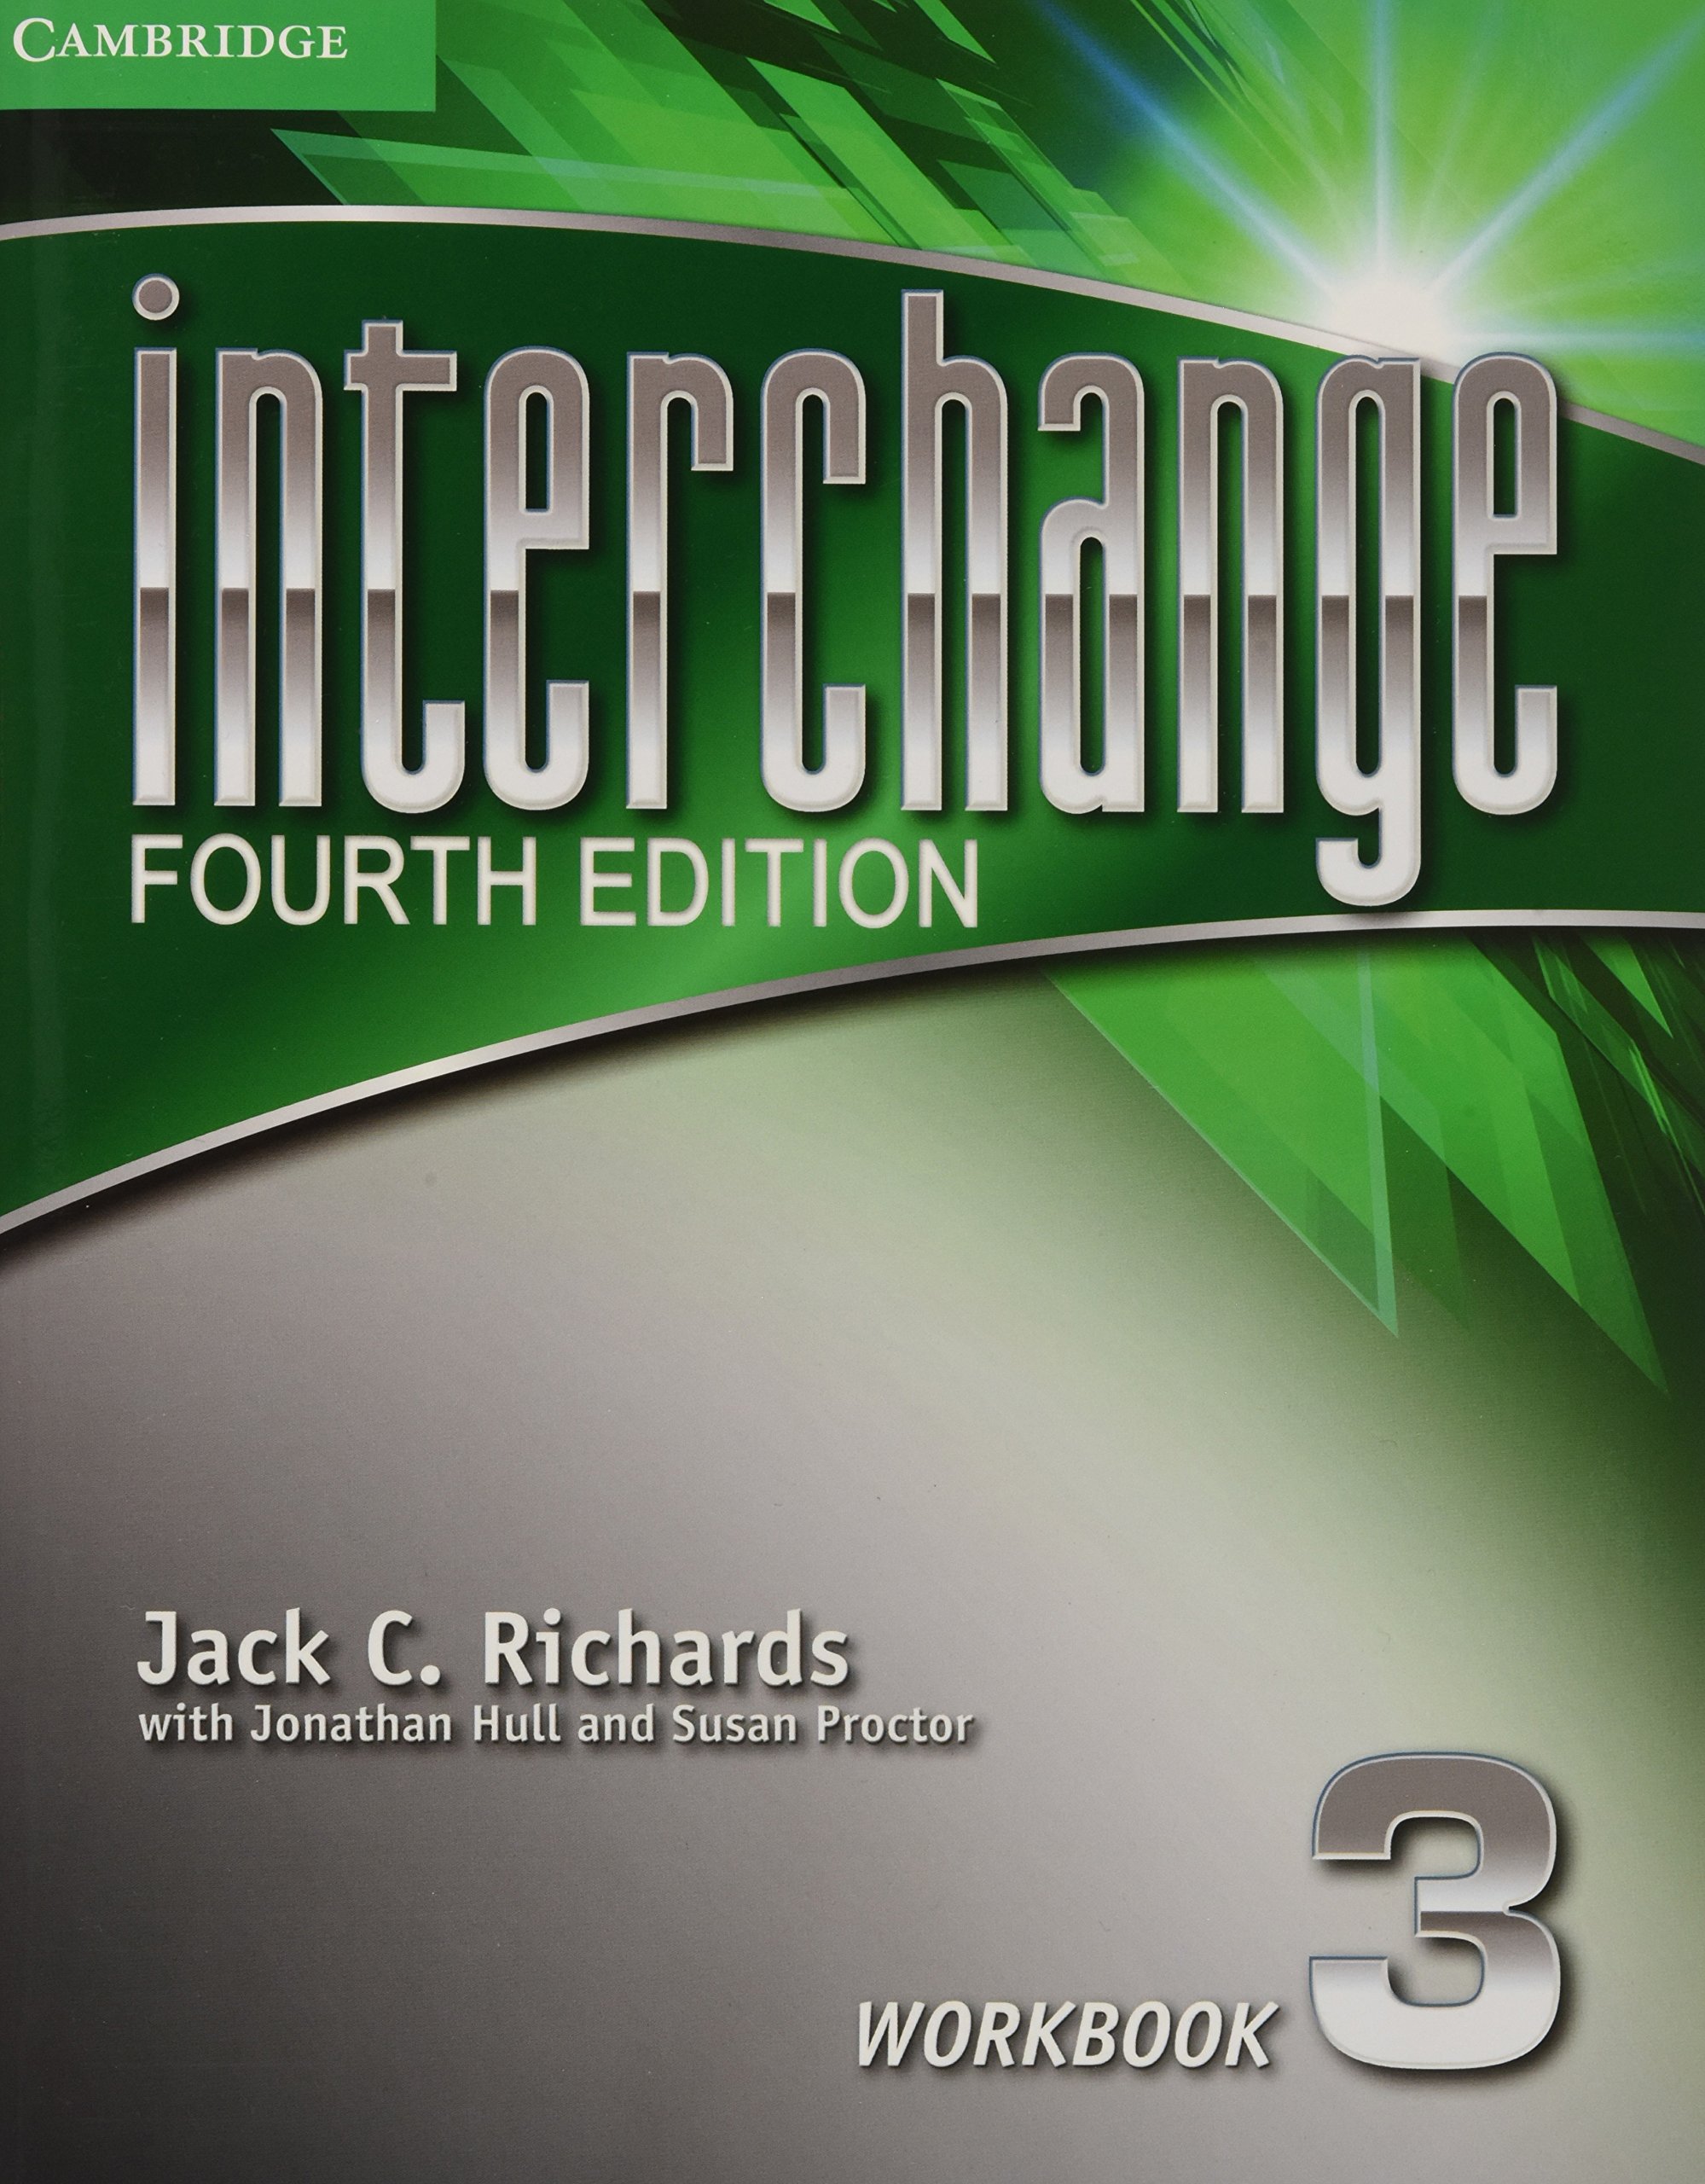 Interchange Level 3 Workbook | Jack C. Richards, Jonathan Hull, Susan Proctor